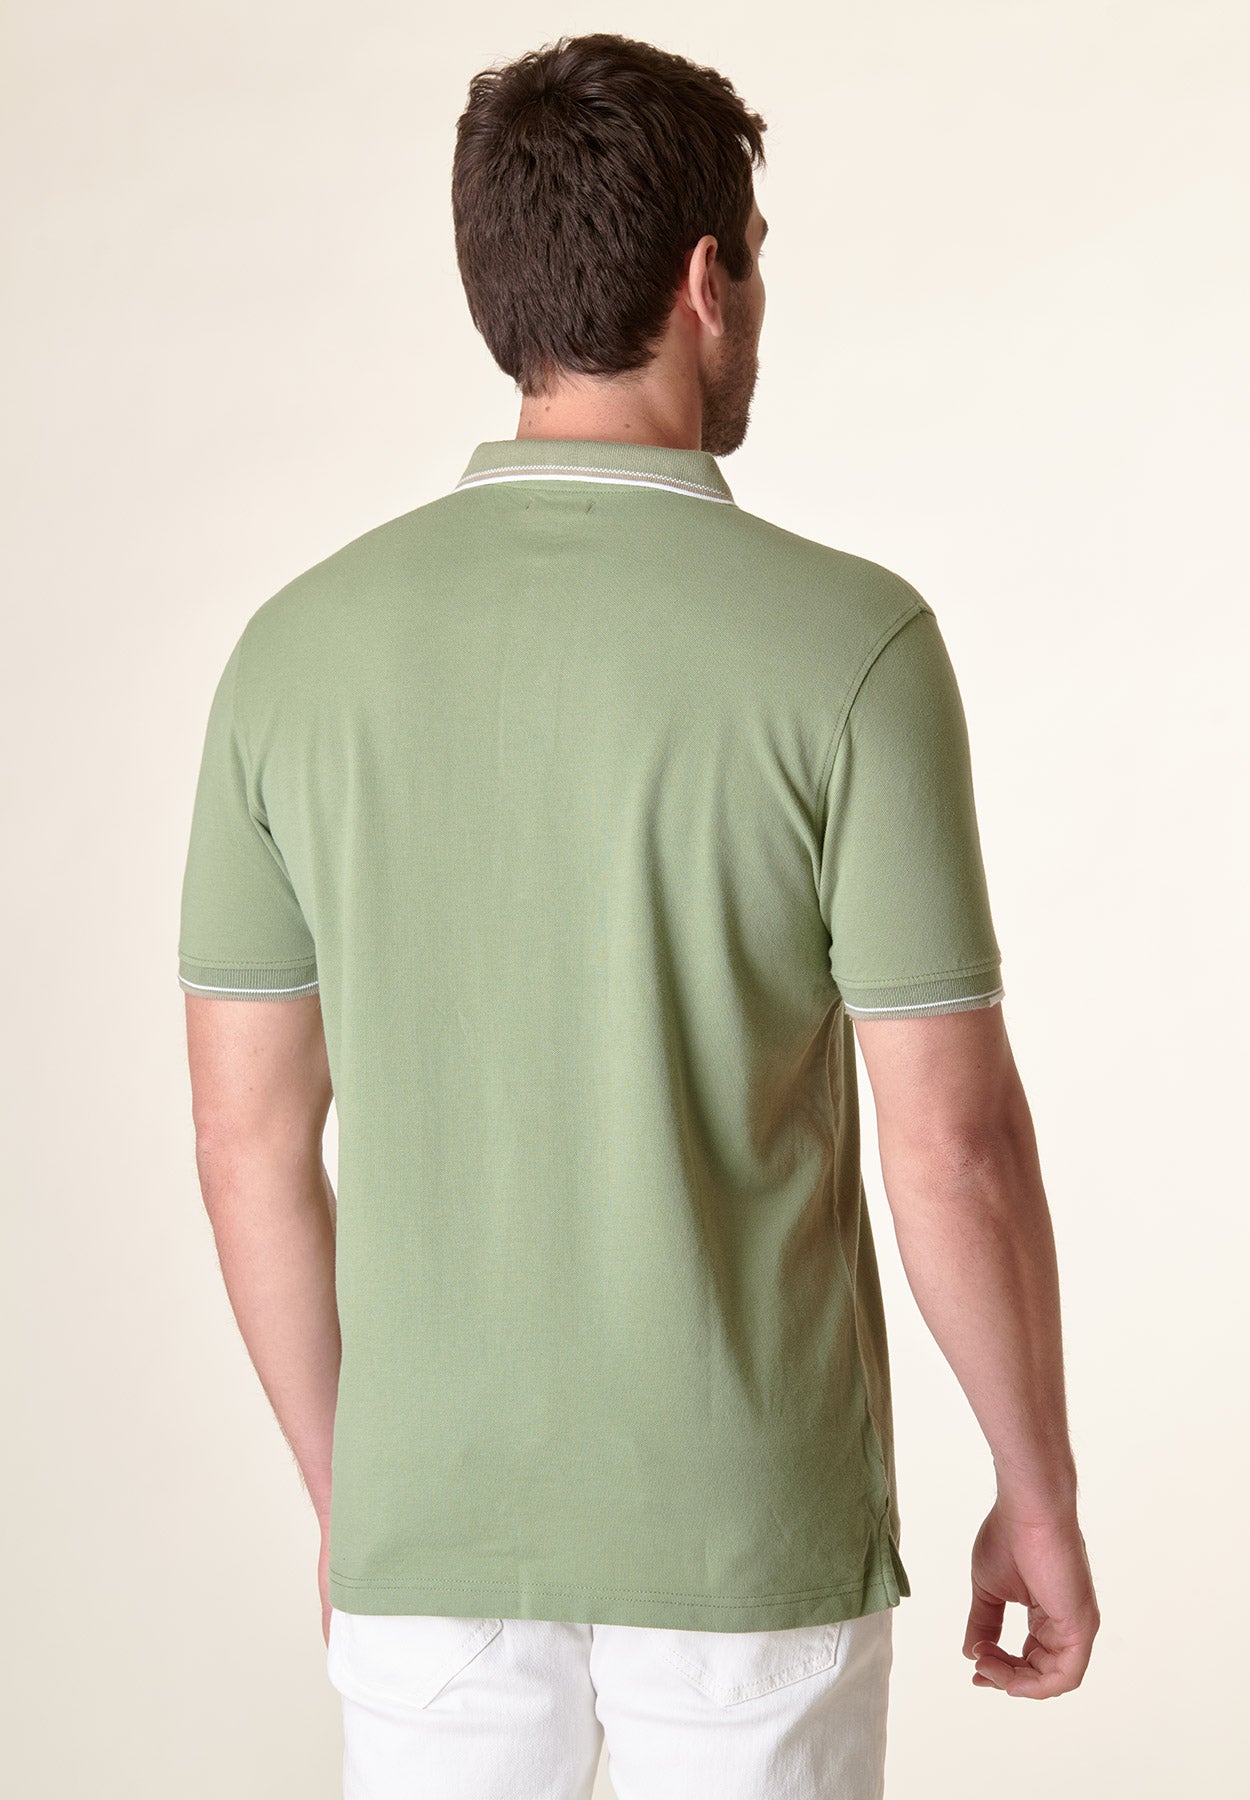 Grünes Baumwoll-Poloshirt mit Jacquard-Kragen